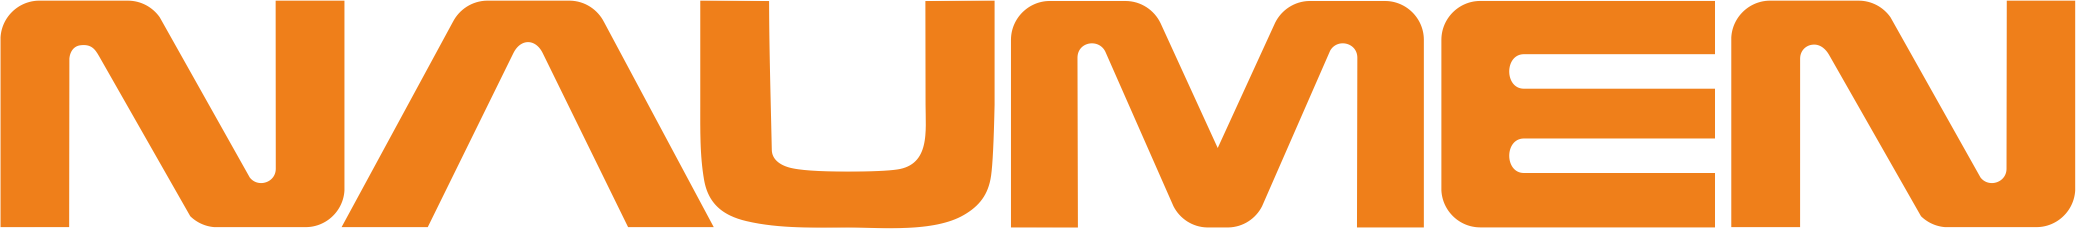 Naumen logo